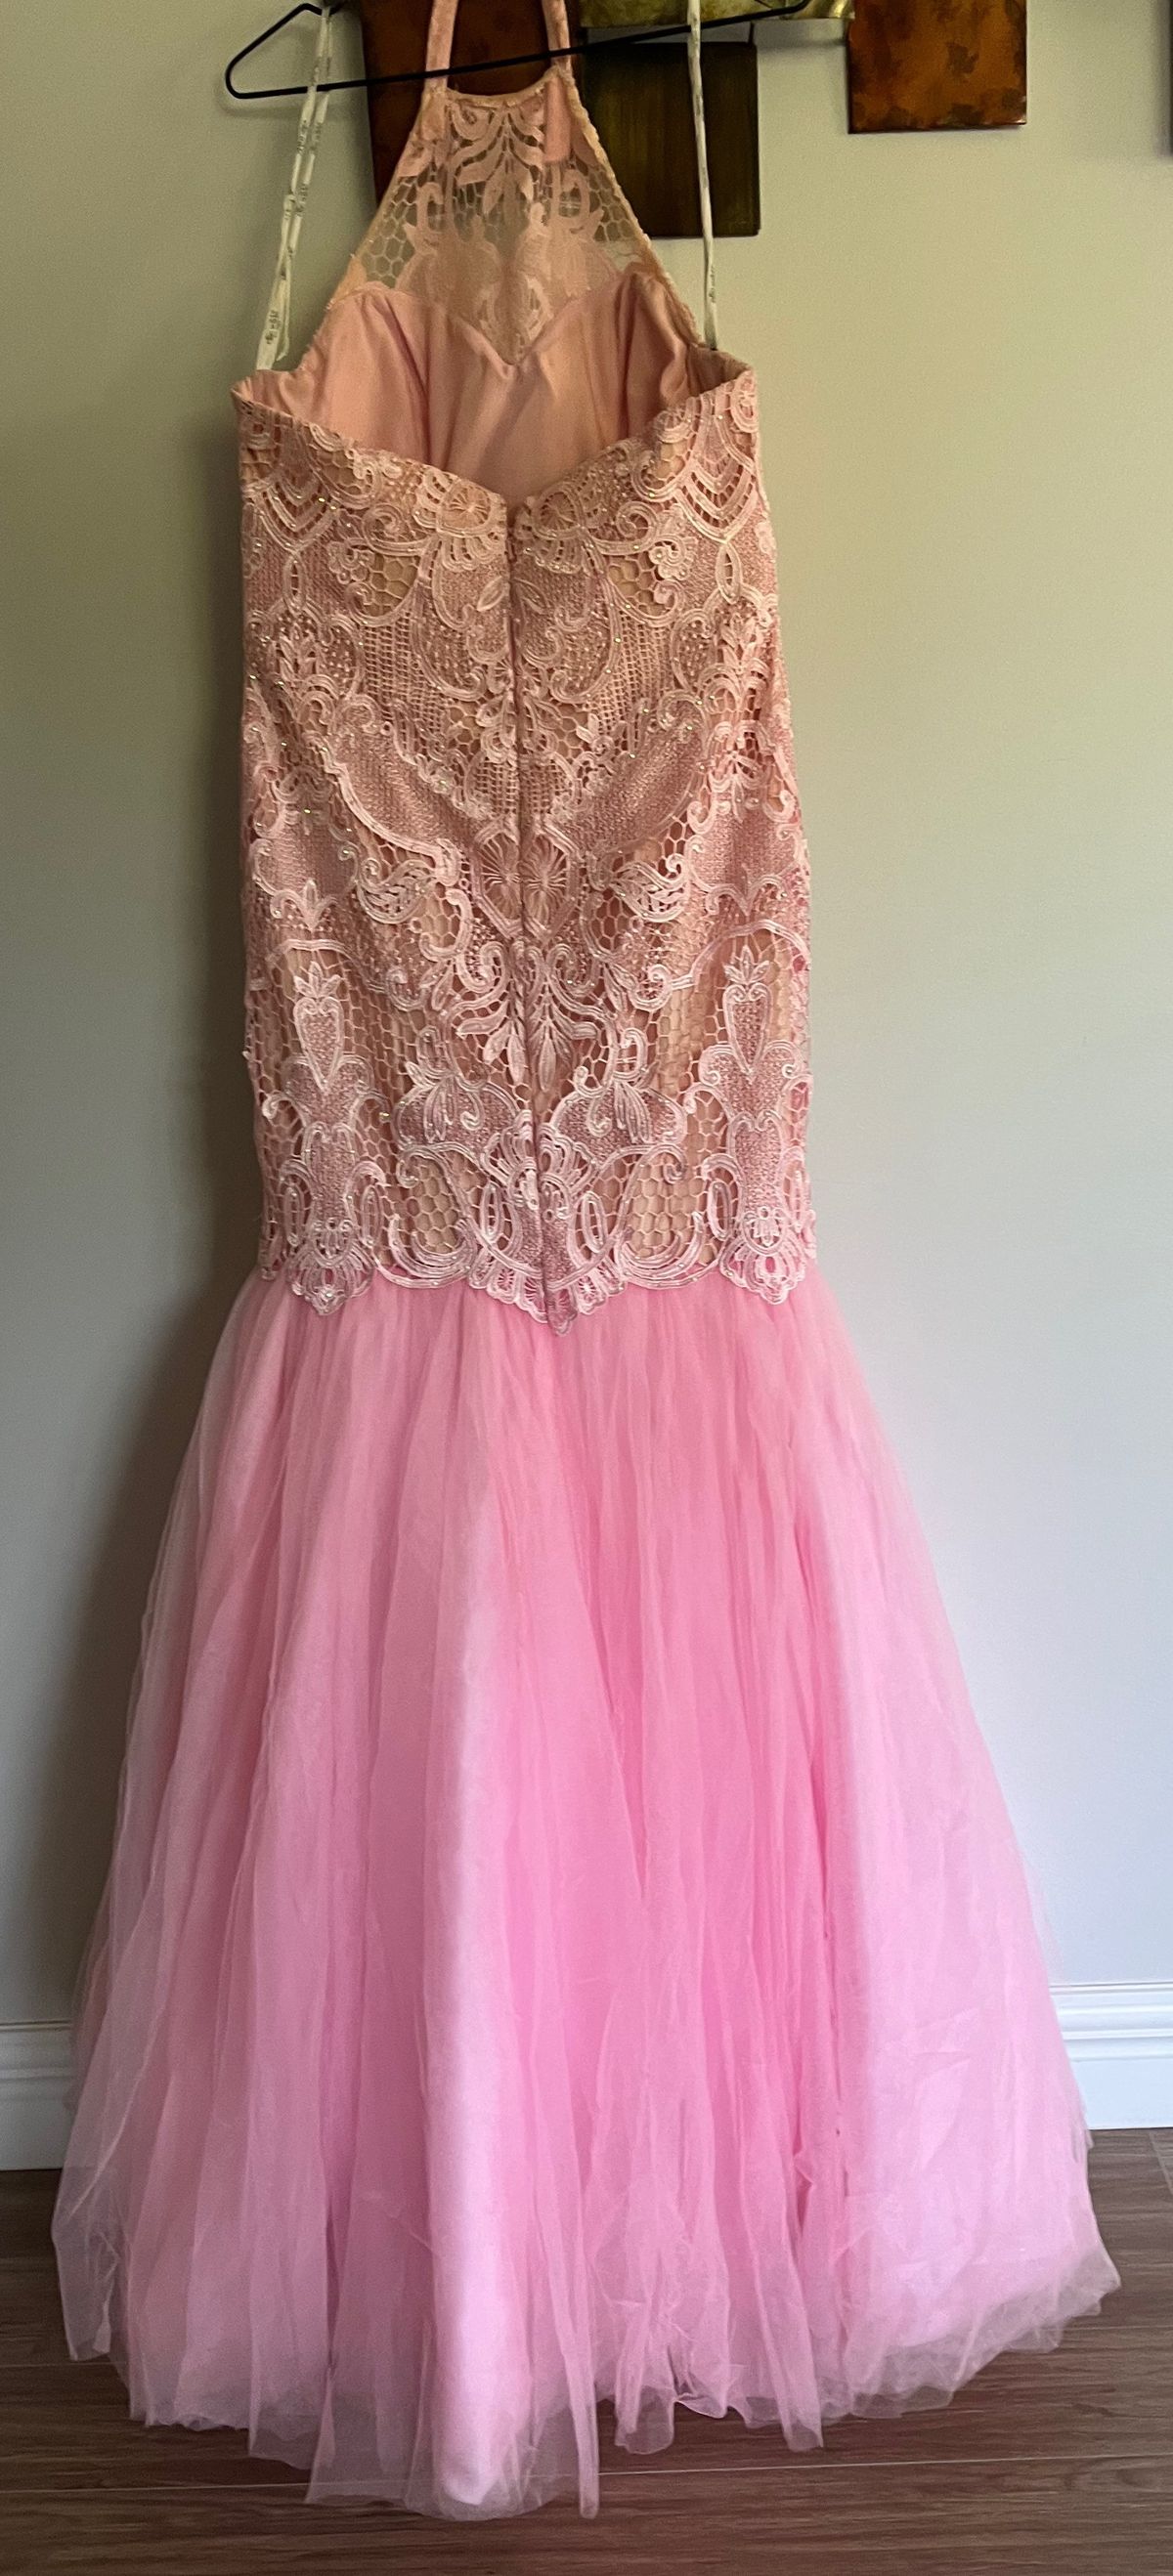 Ellie Wilde Size 8 Prom Halter Pink Mermaid Dress on Queenly